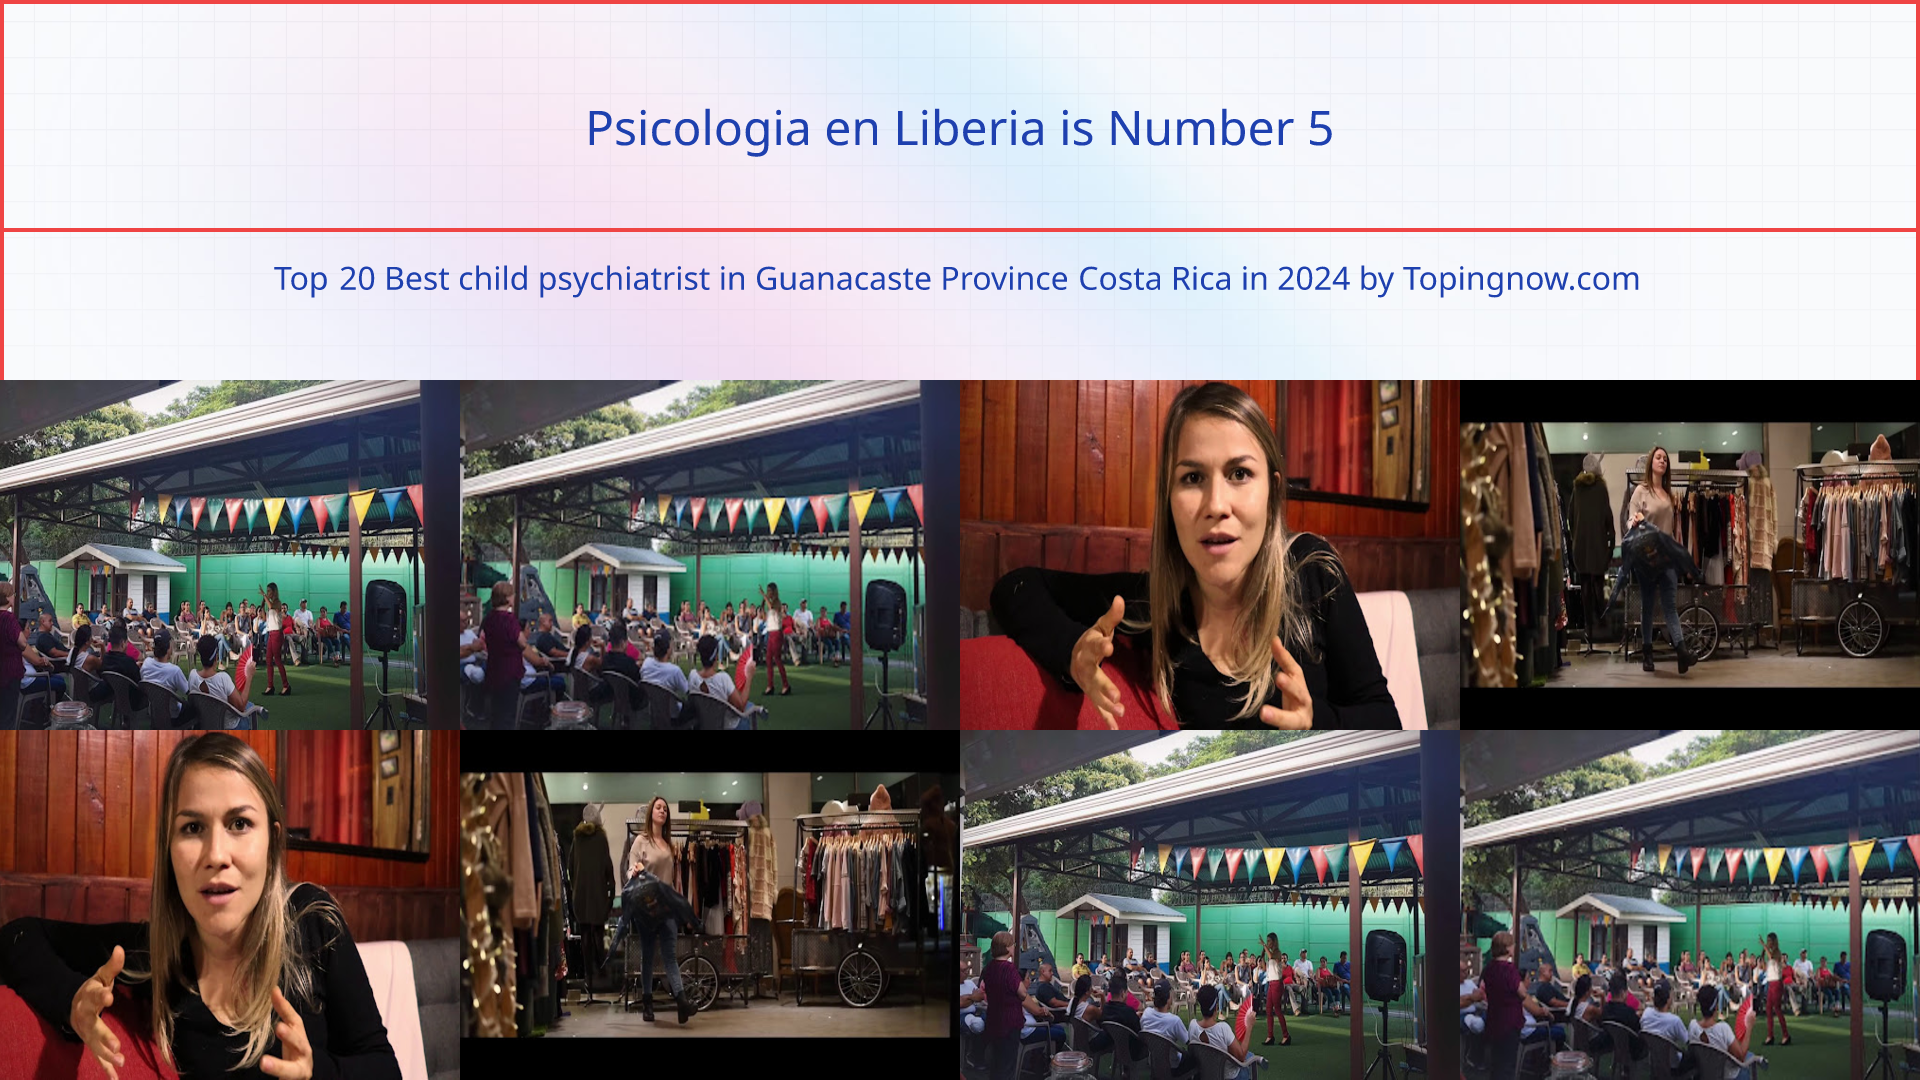 Psicologia en Liberia: Top 20 Best child psychiatrist in Guanacaste Province Costa Rica in 2024